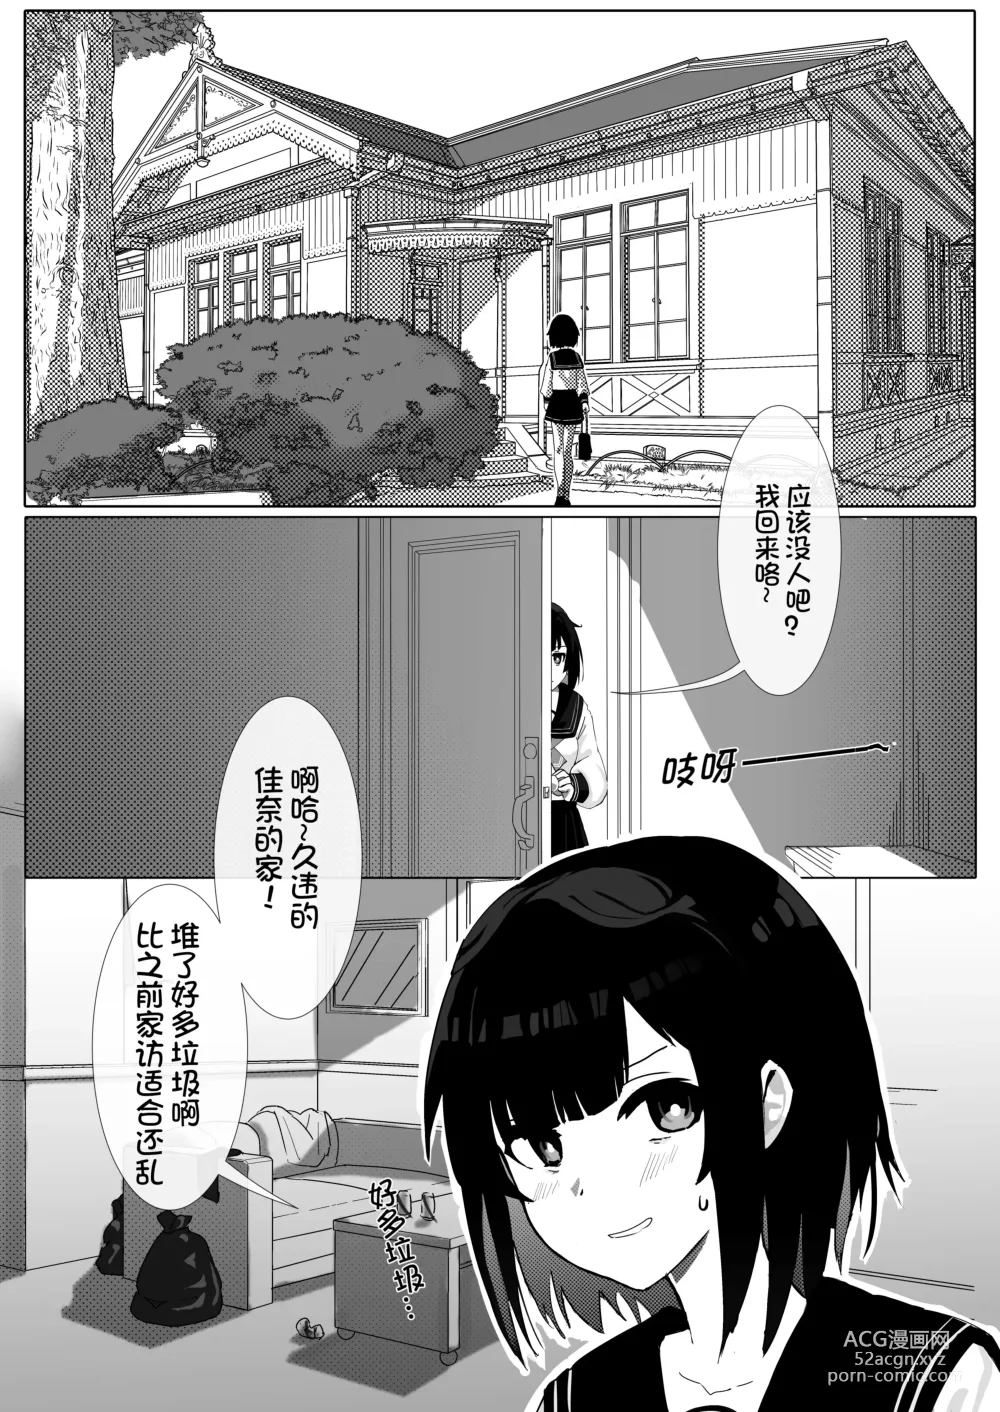 Page 1 of manga 皮物問題學生 #1 渡邊佳奈、2